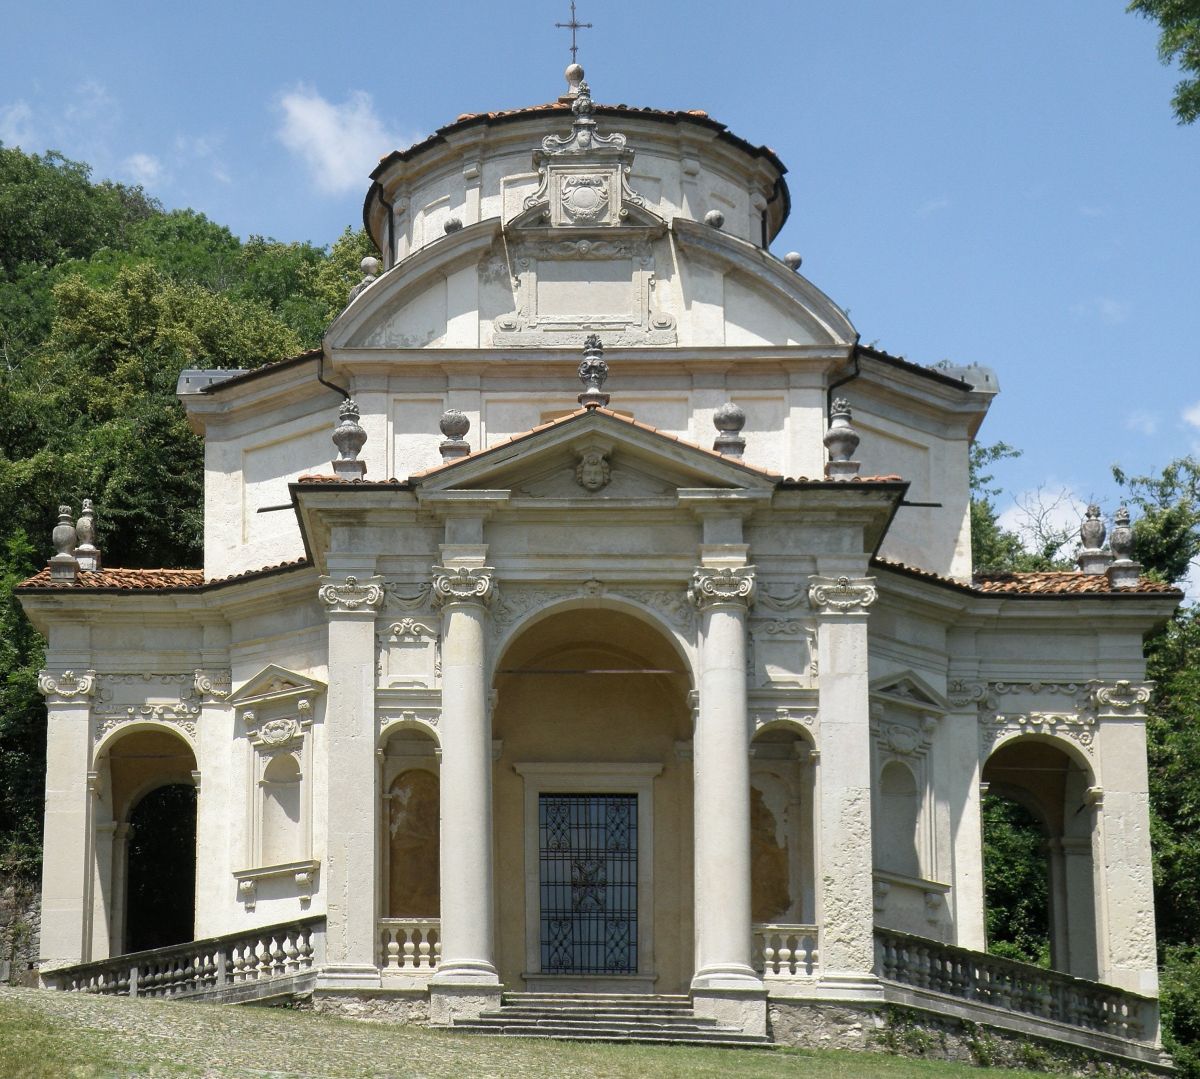 Sacro Monte - Chapel No. 5 